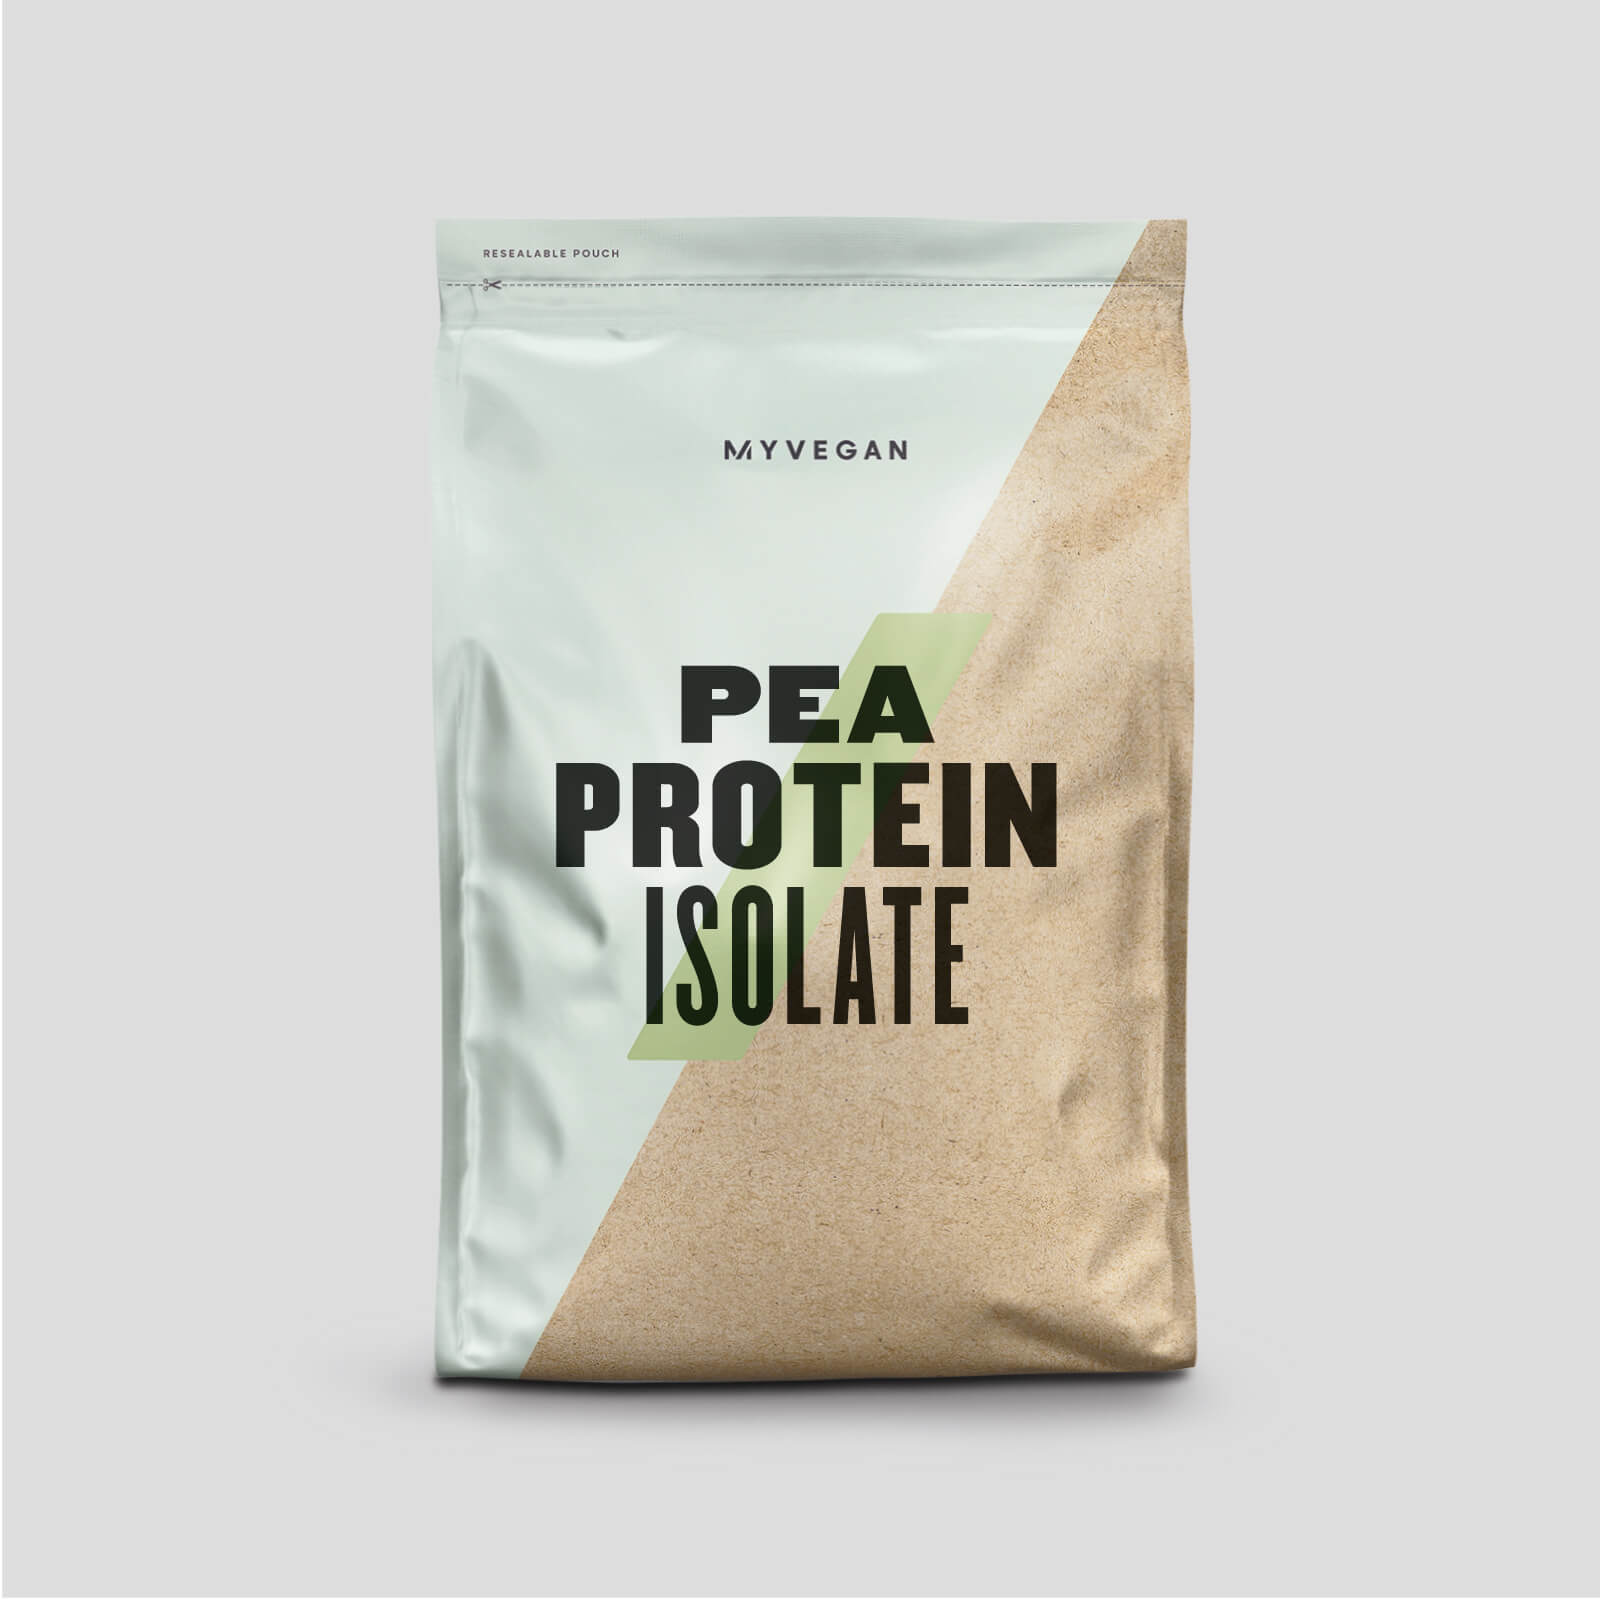 Myvegan Pea Protein Isolate - 1kg - Coffee & Walnut